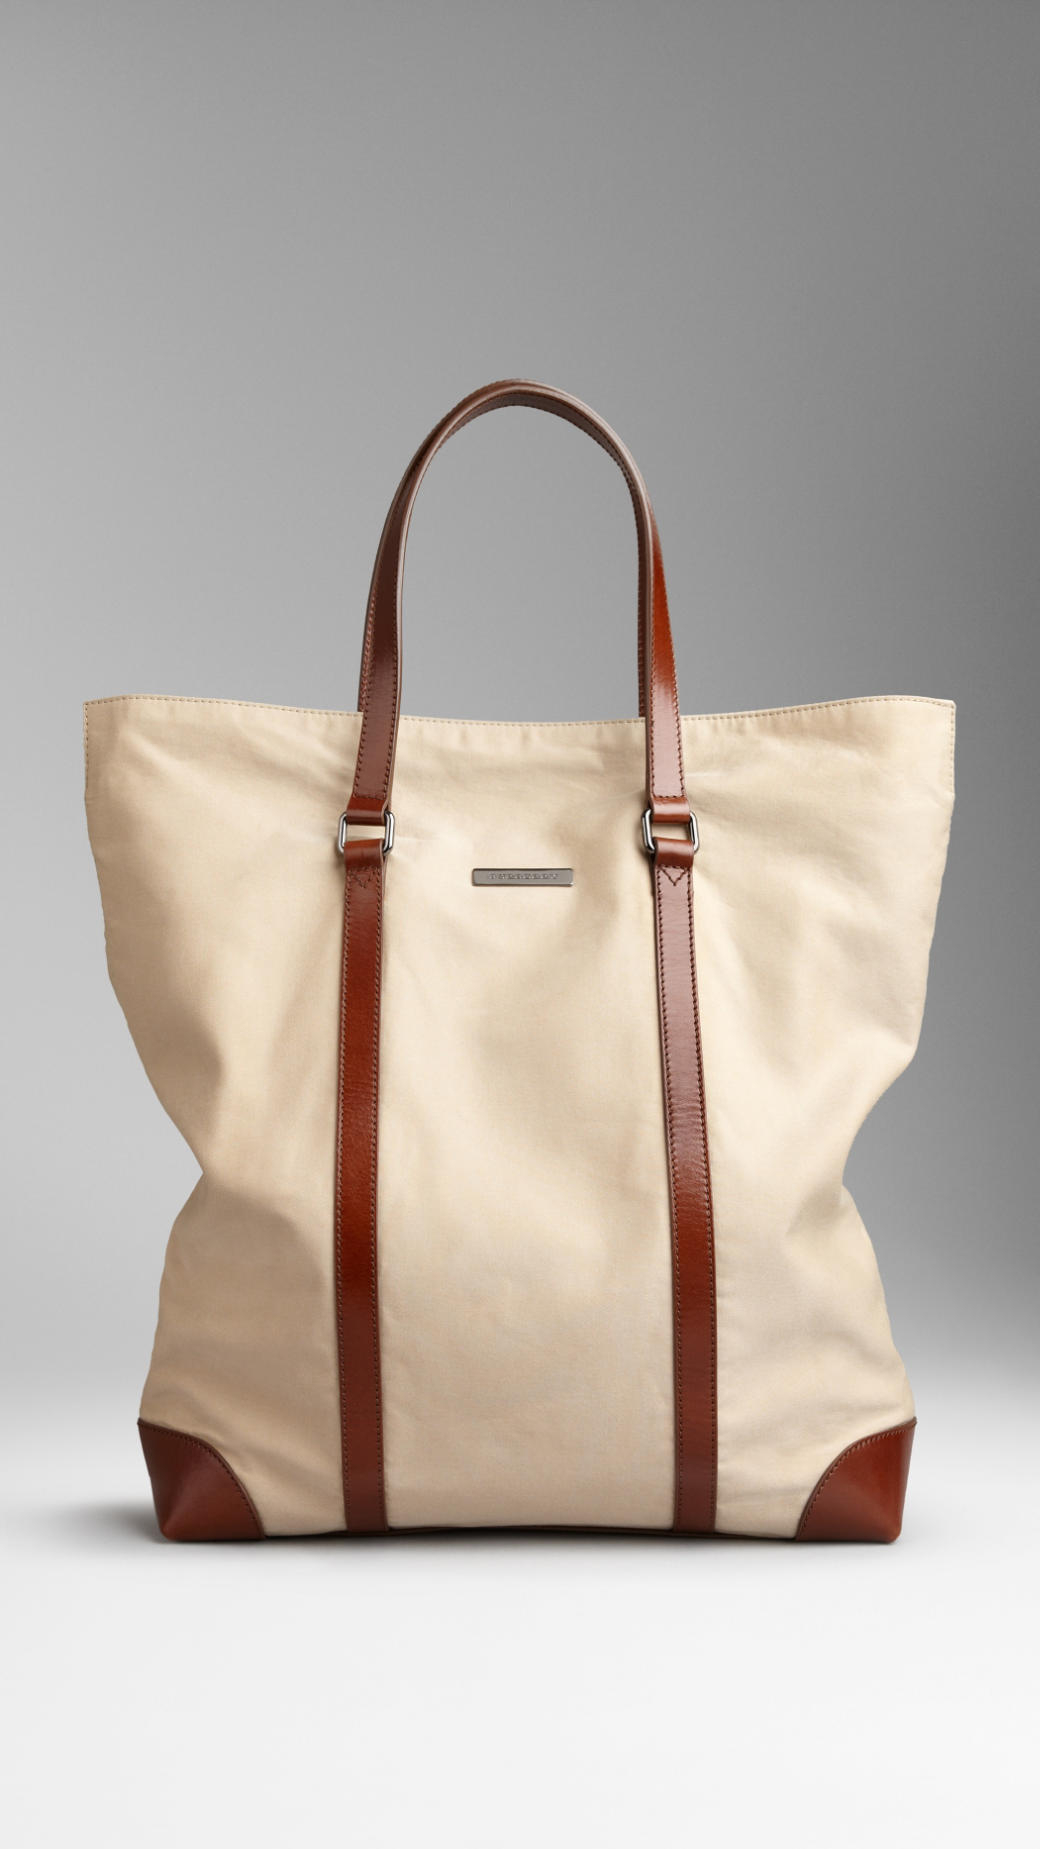 Lyst - Burberry Cotton Gabardine Tote Bag in Natural for Men